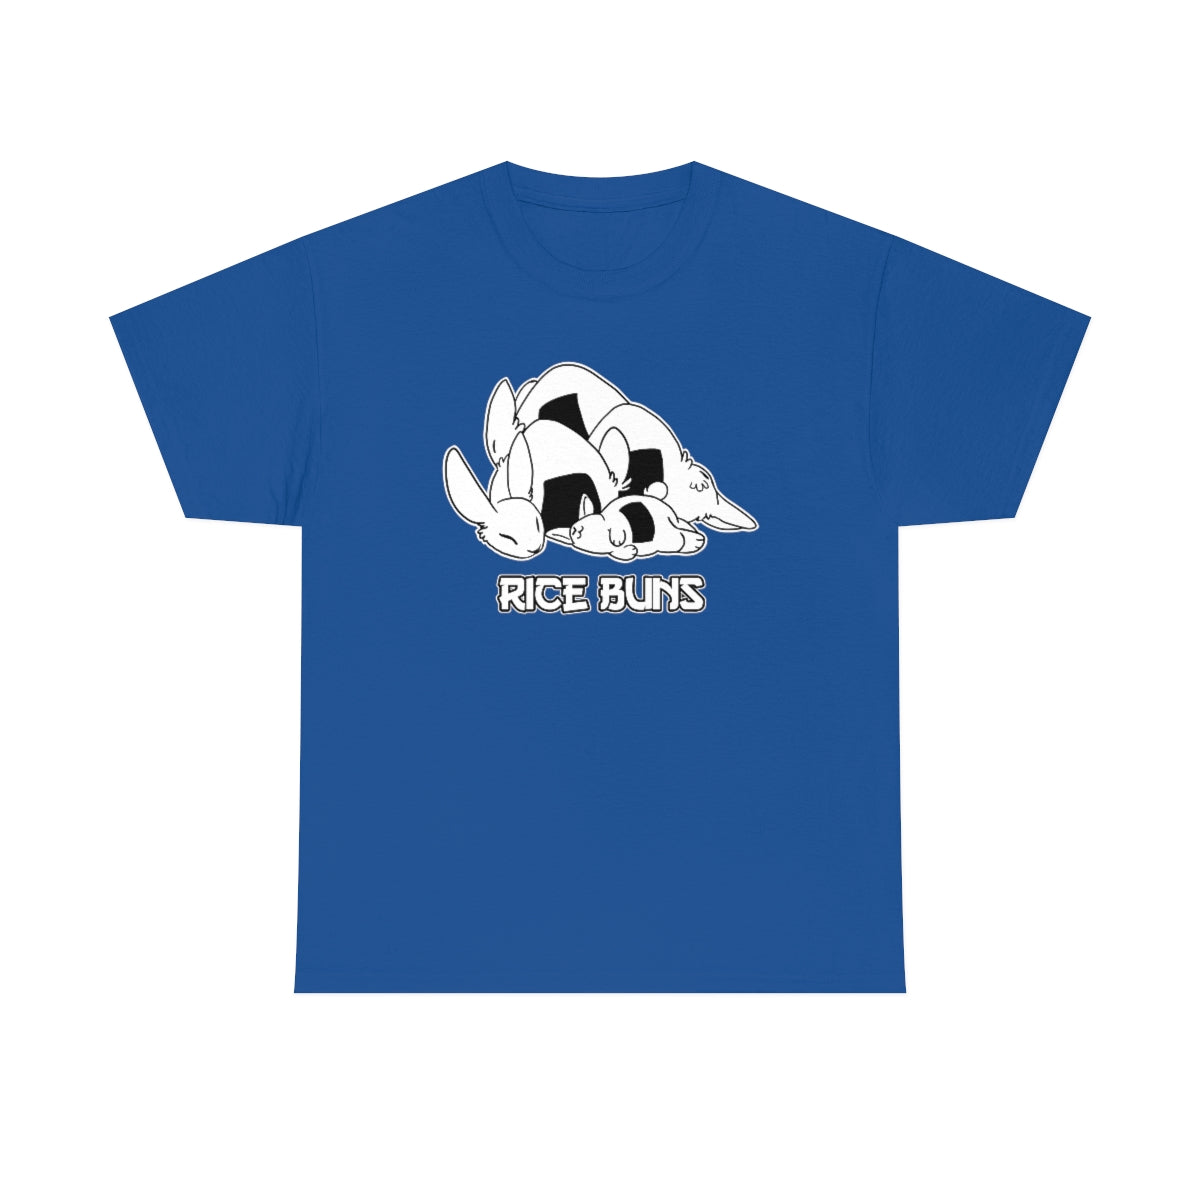 Rice Buns - T-Shirt T-Shirt Crunchy Crowe Royal Blue S 